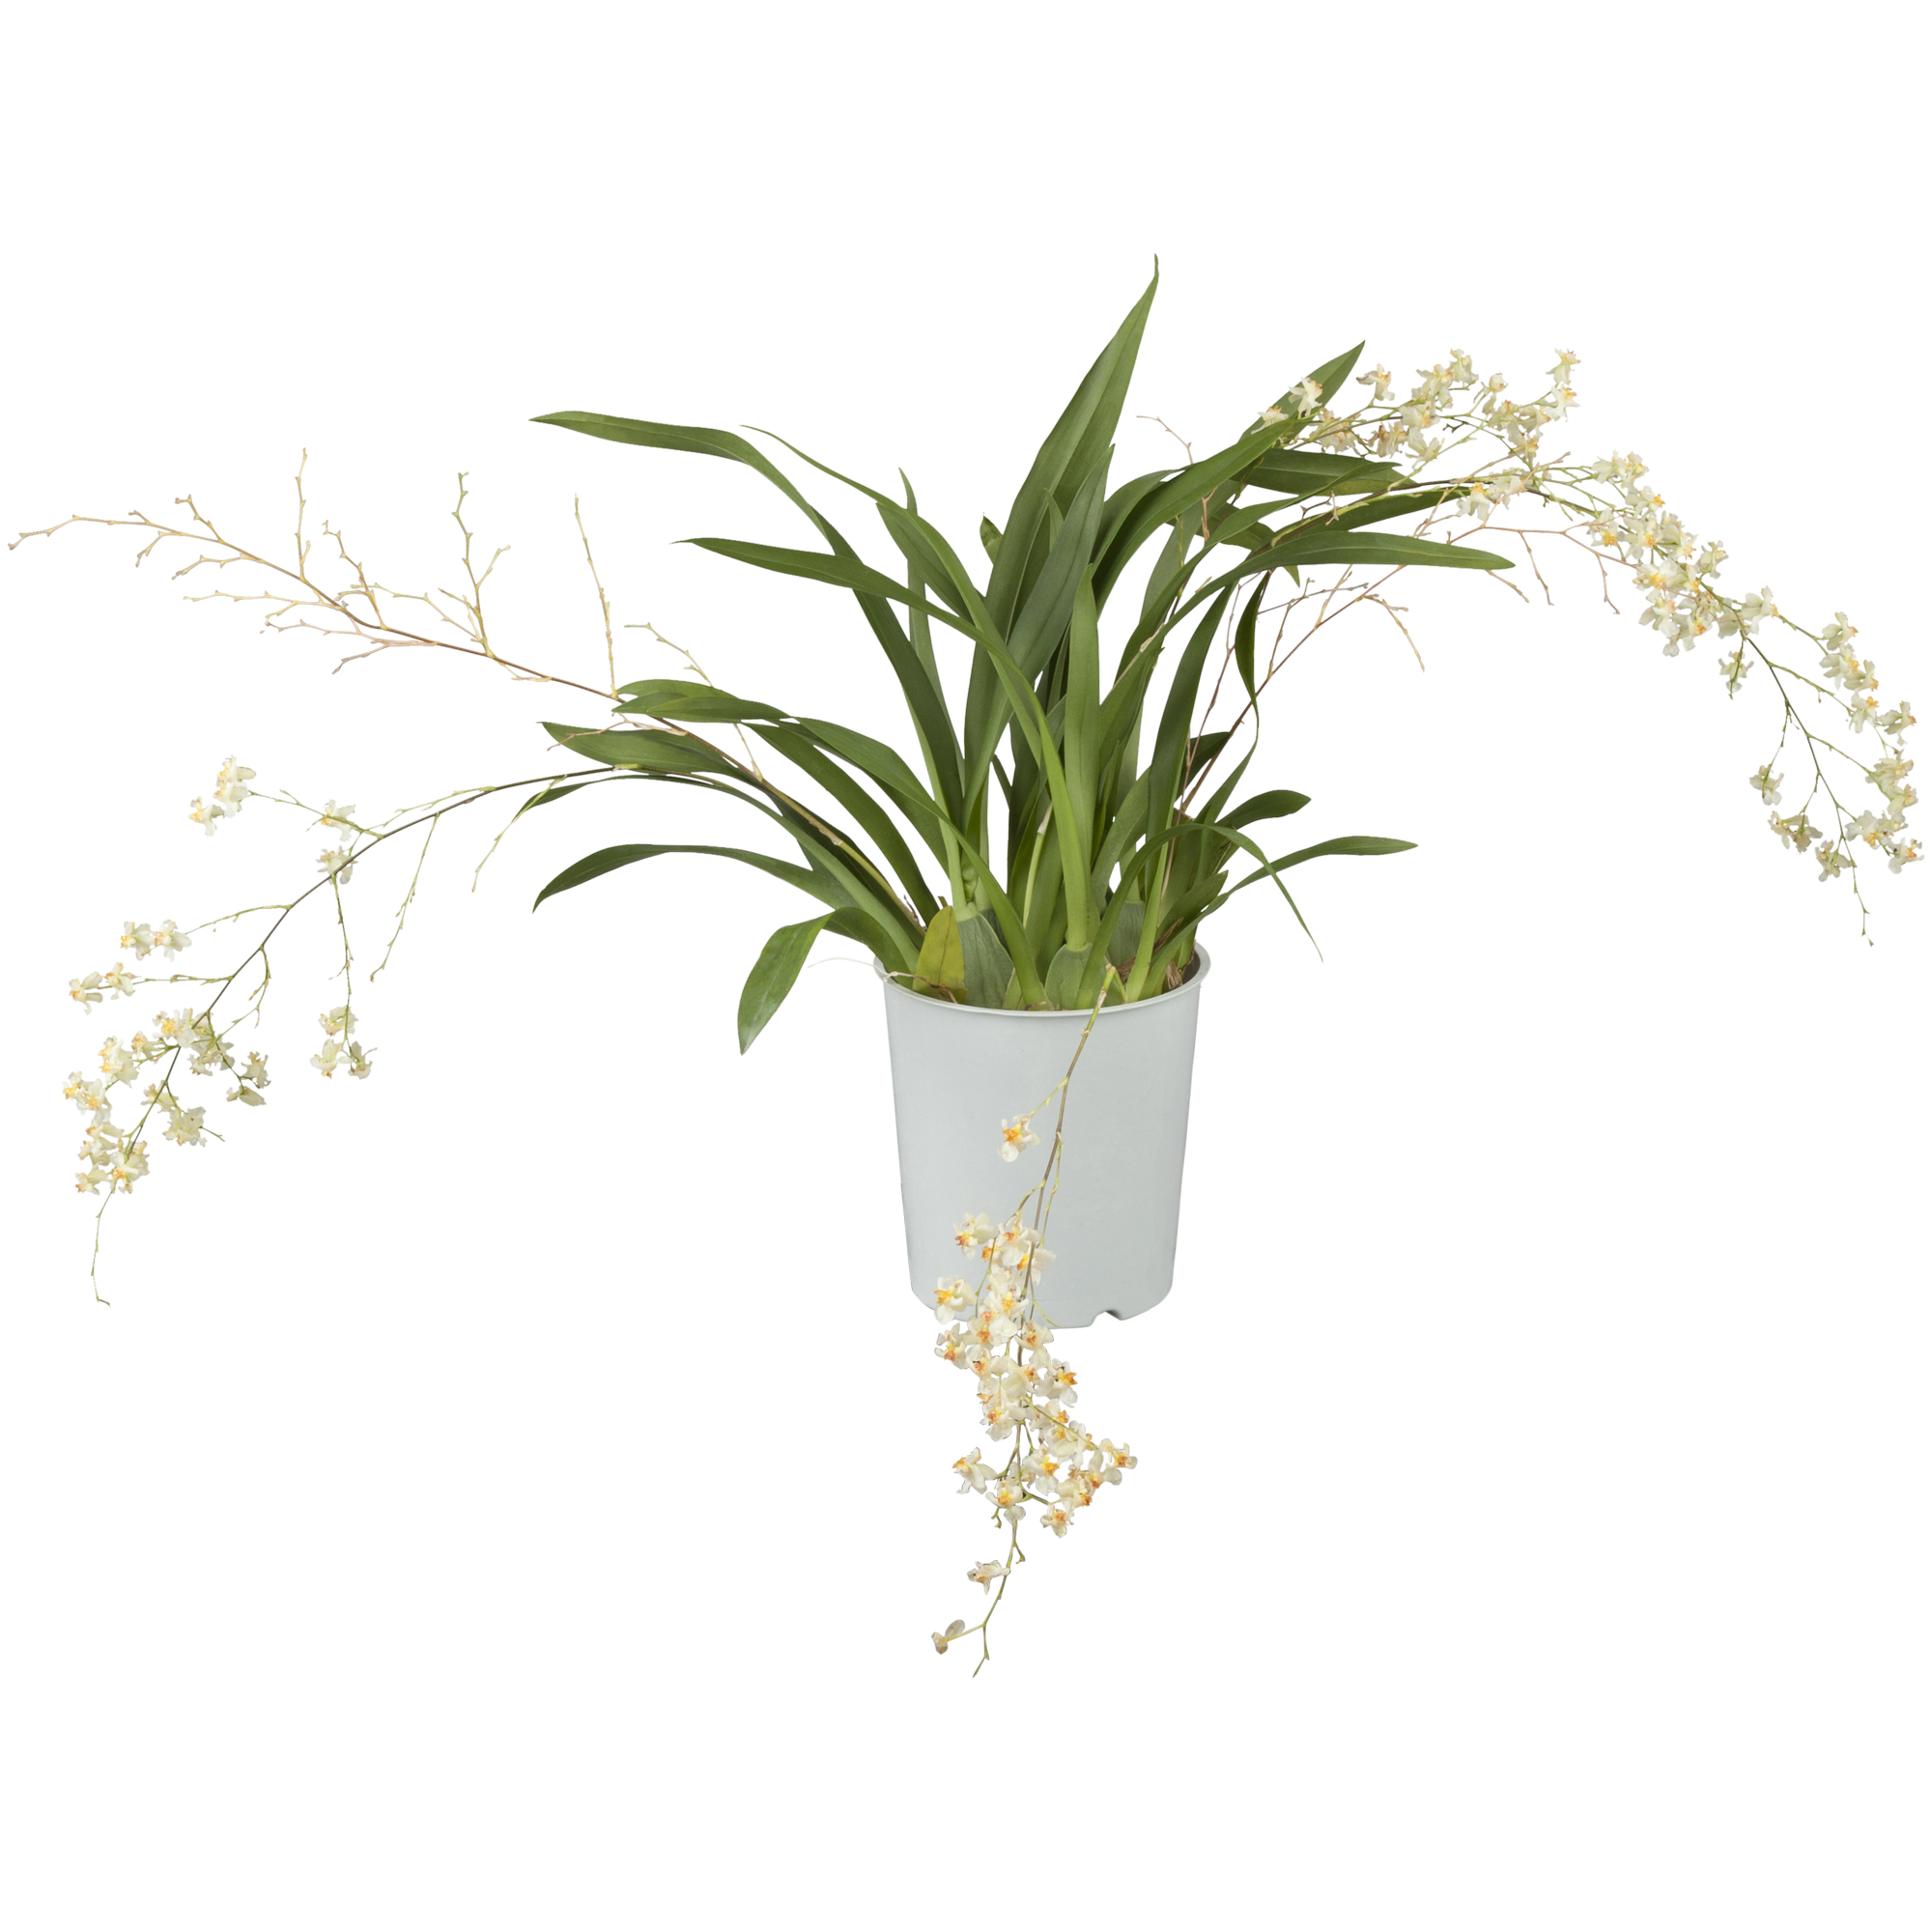 Oncidium-Orchidee 'Tiny Twinkle' verschiedene Farben 9 cm Topf + product picture